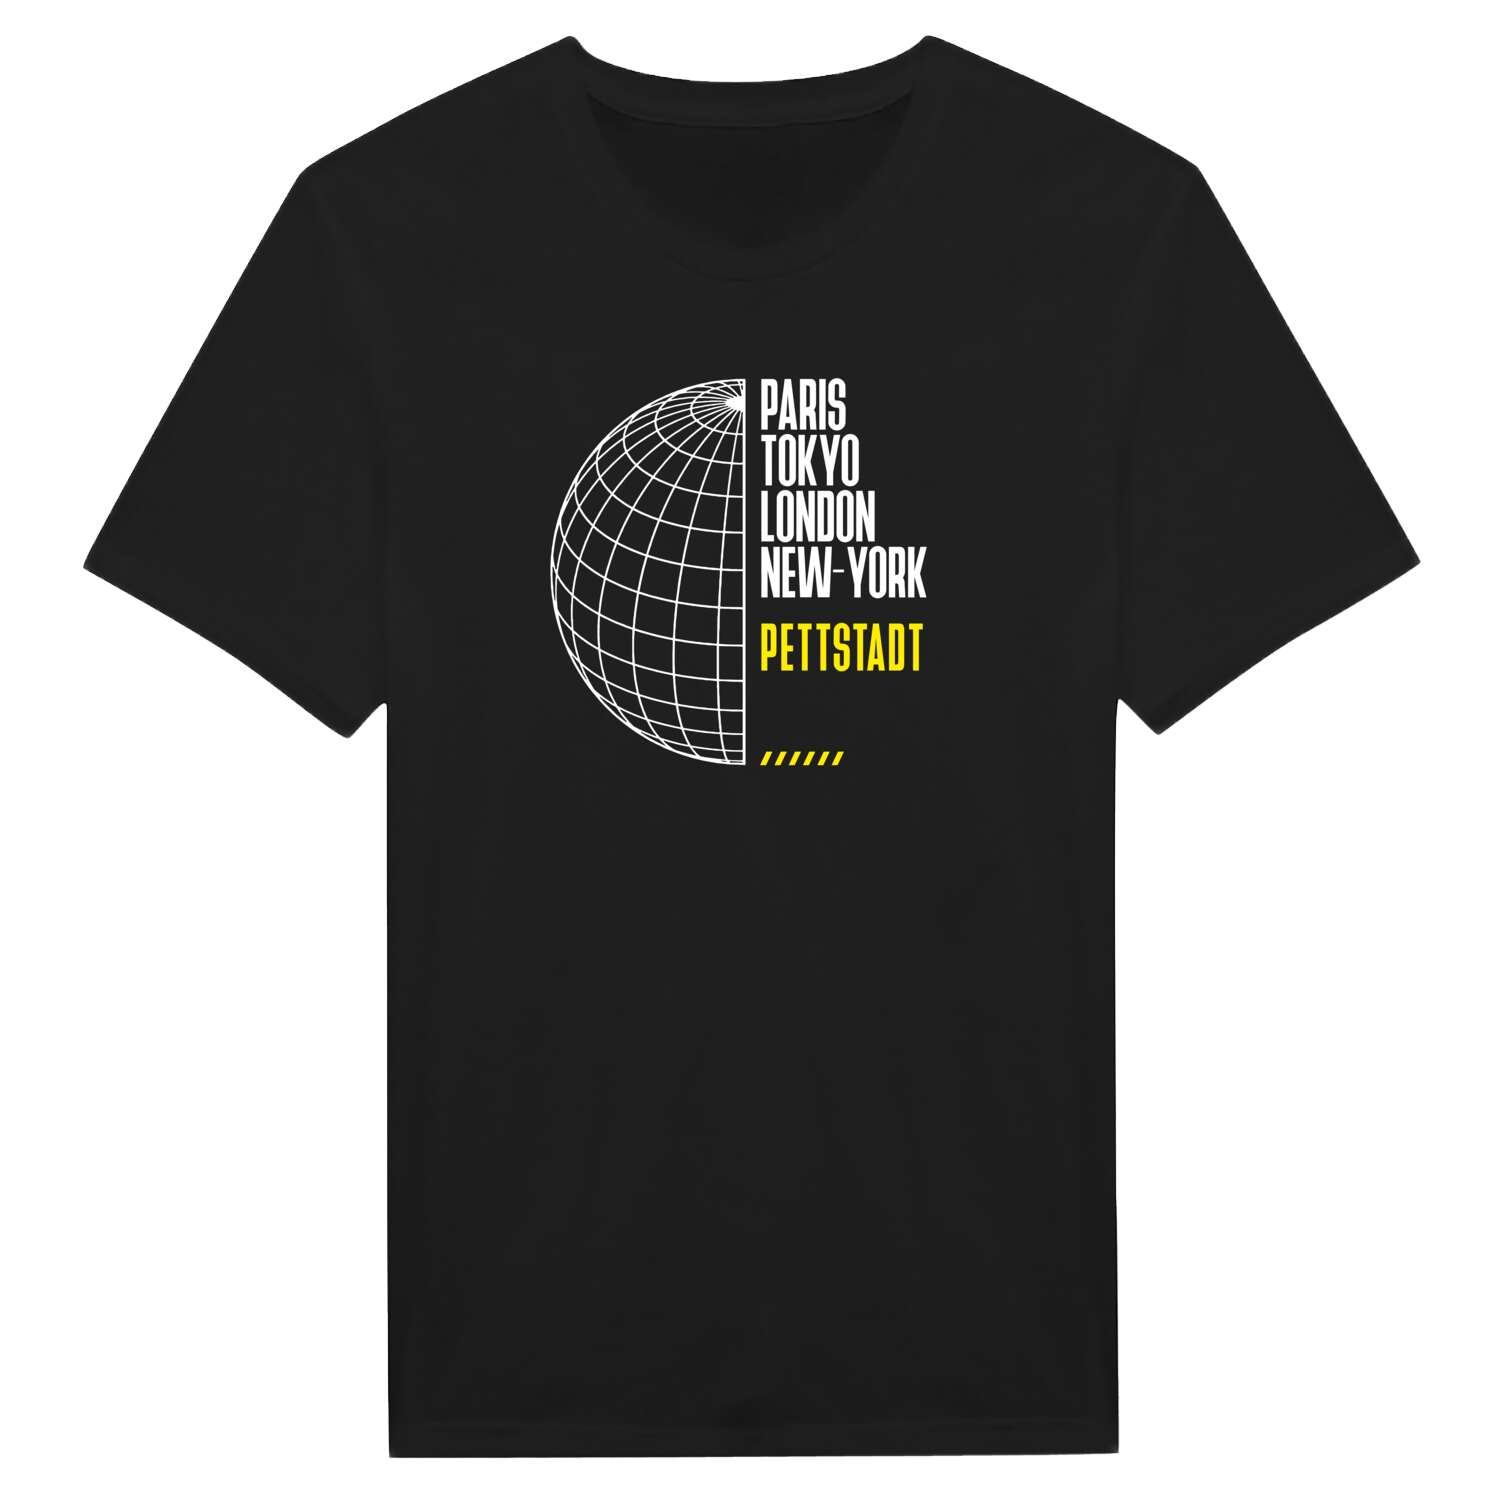 Pettstadt T-Shirt »Paris Tokyo London«